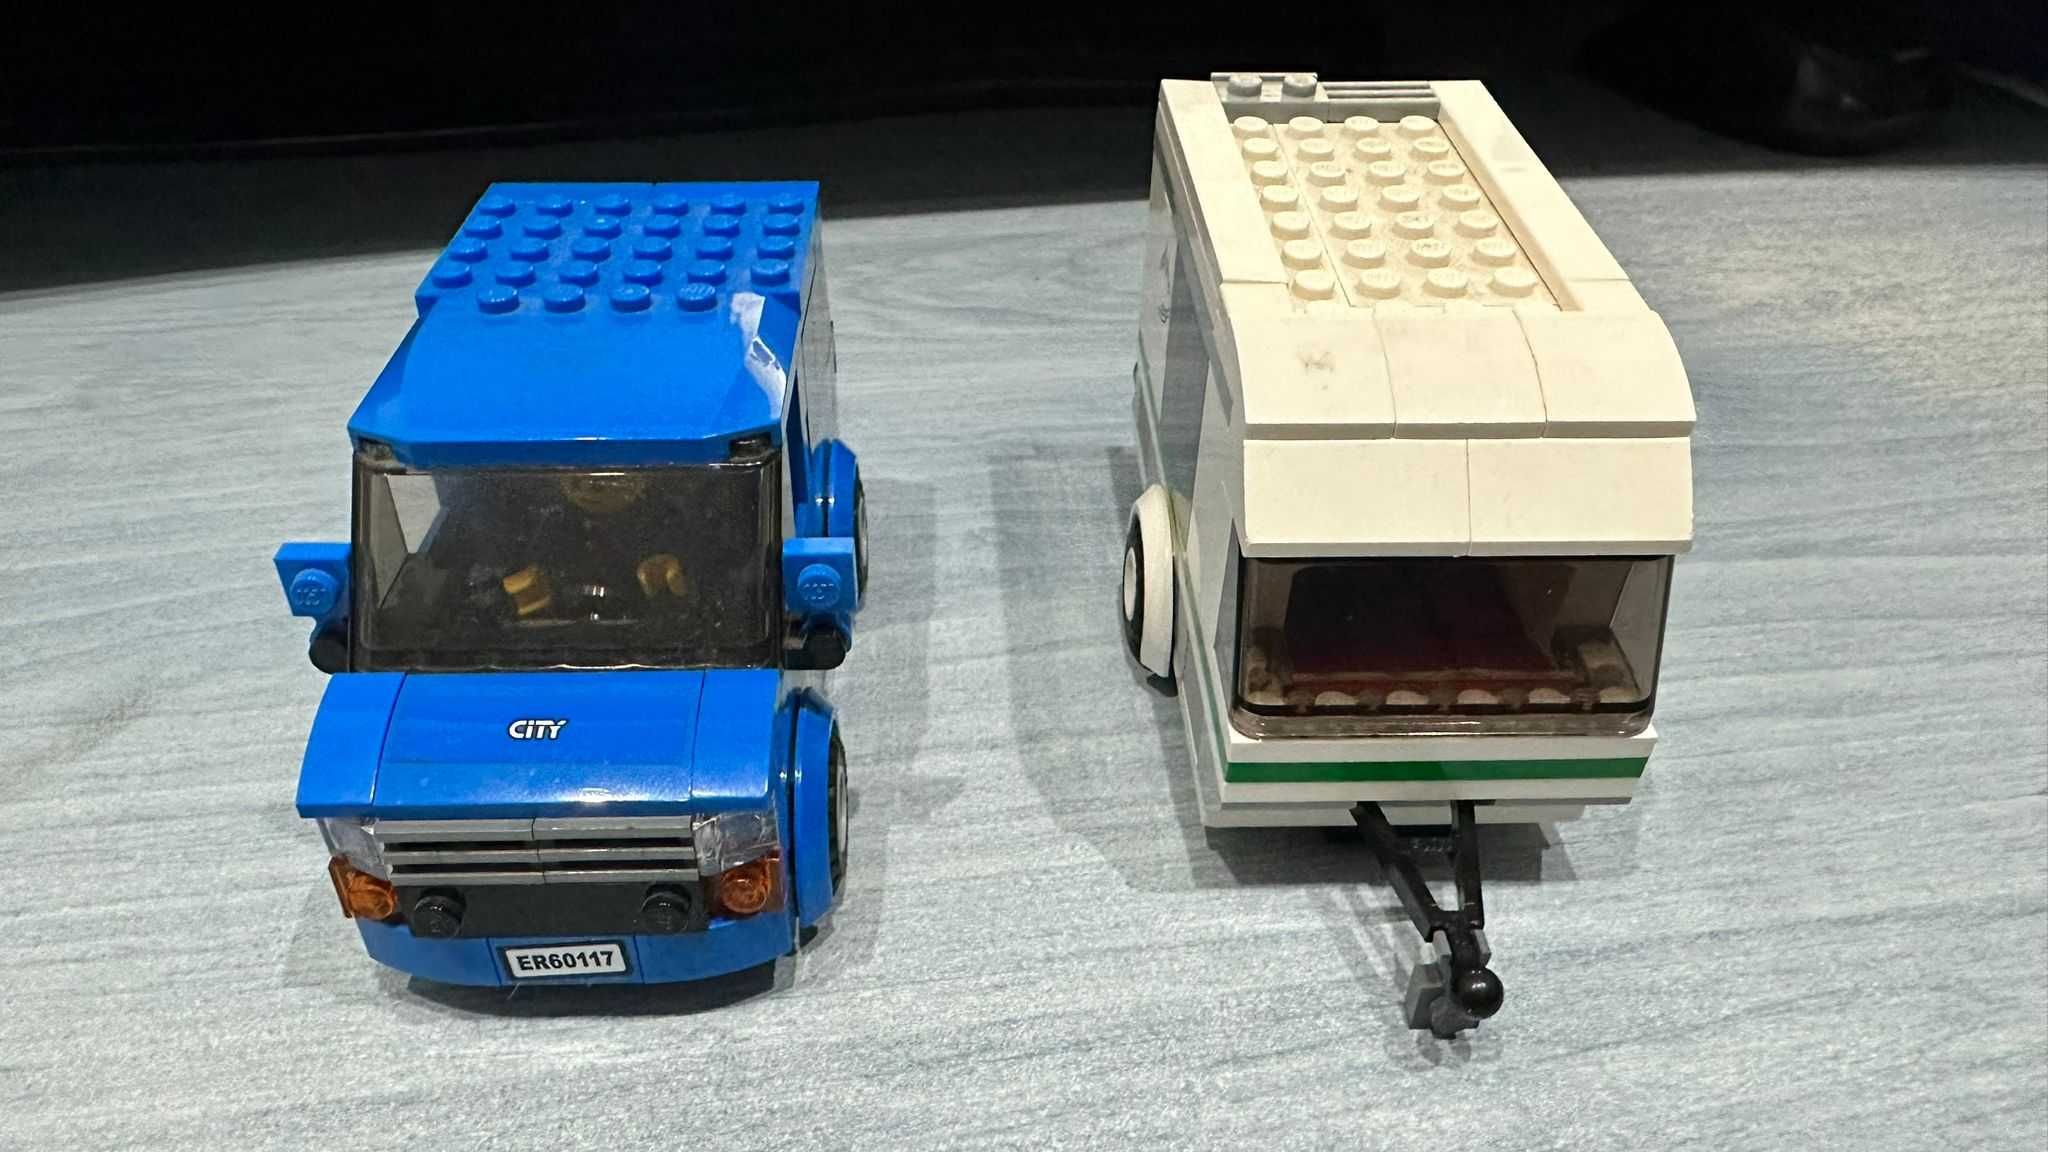 Lego City 60117 - Masina cu rulota / camping